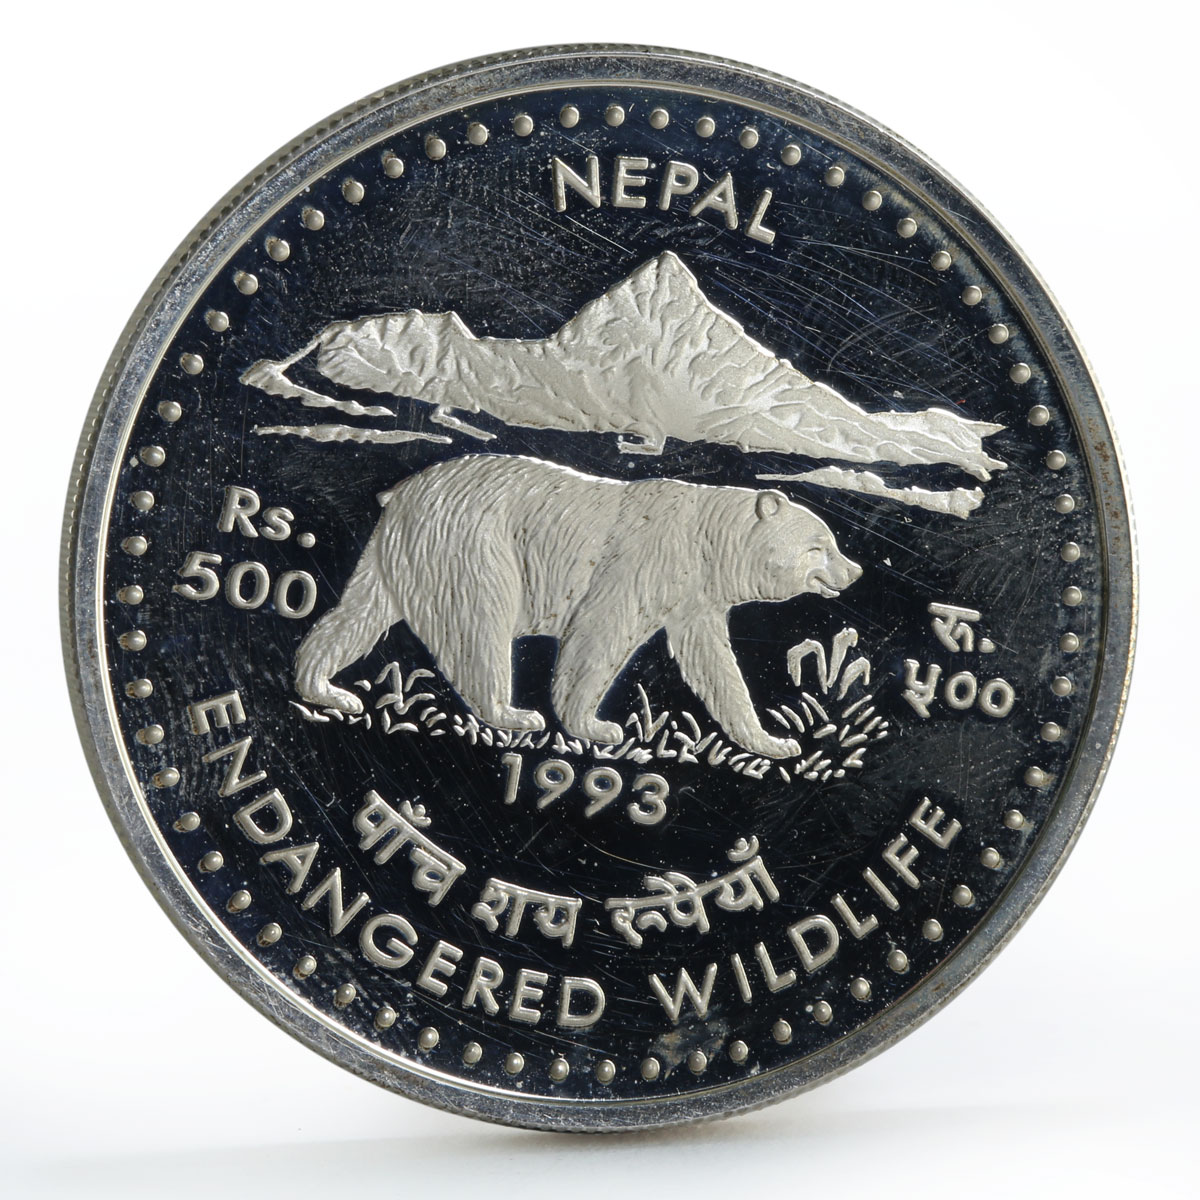 Nepal 500 rupees Endangered Wildlife Himalayan Black Bear silver coin 1993